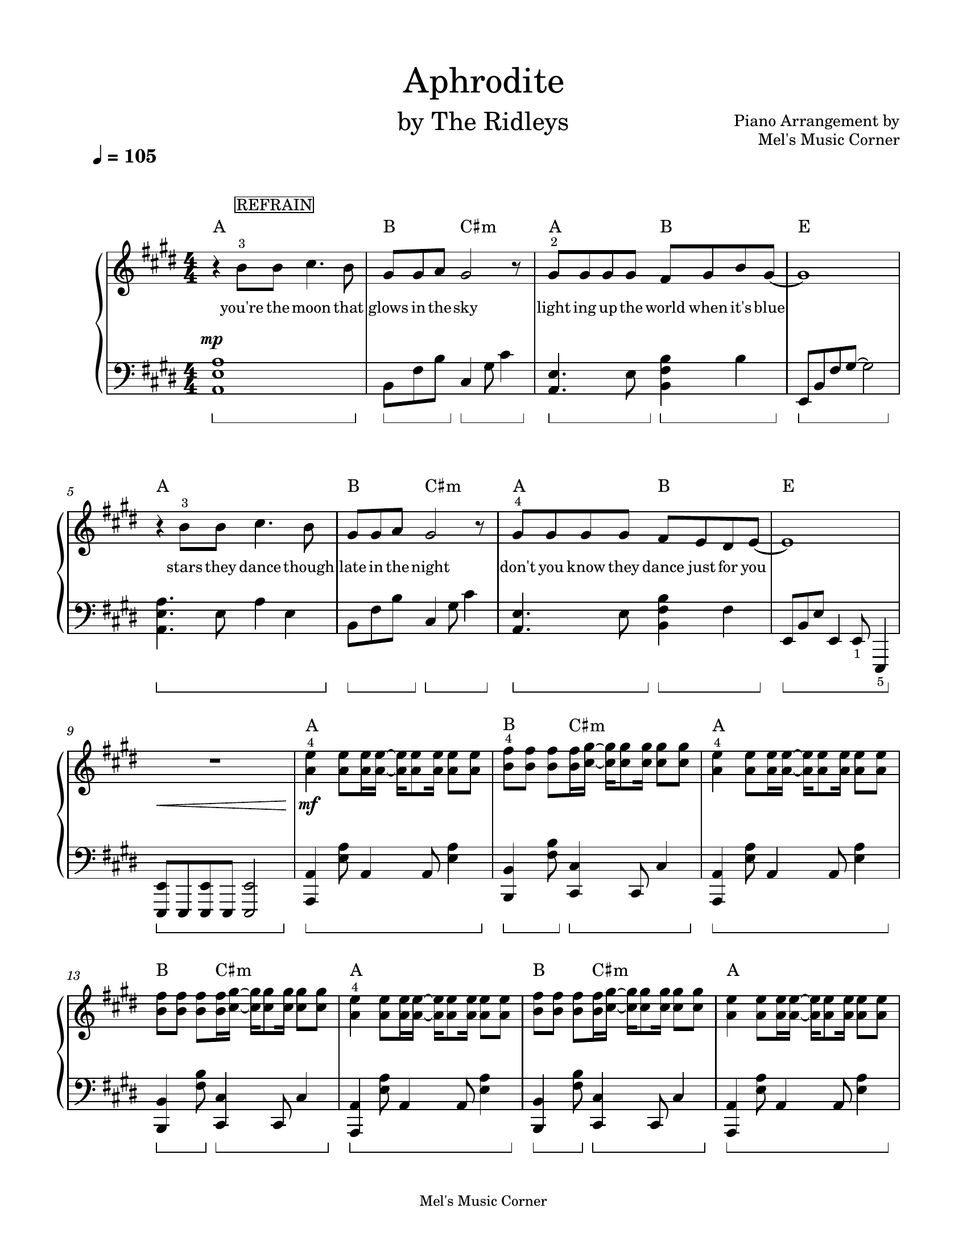 The Ridleys - Aphrodite (piano sheet music) by Mel's Music Corner